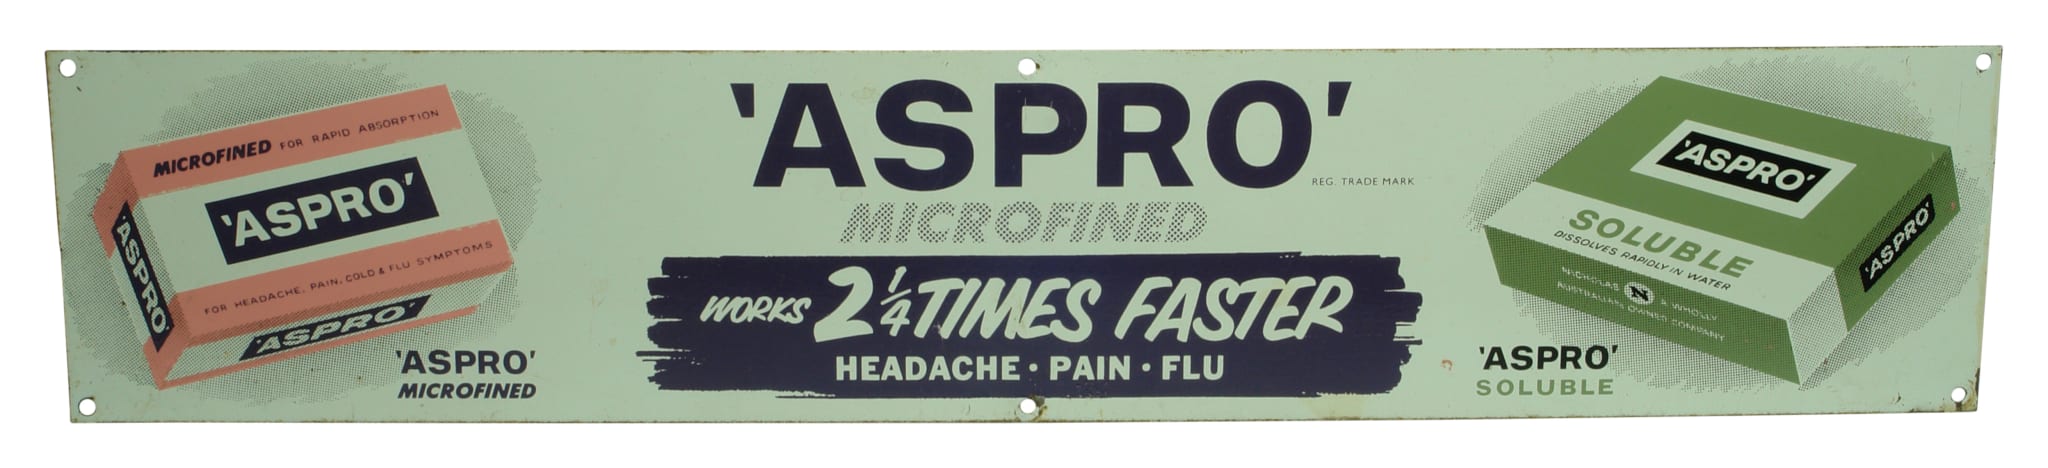 Vintage Aspro Tin Sign